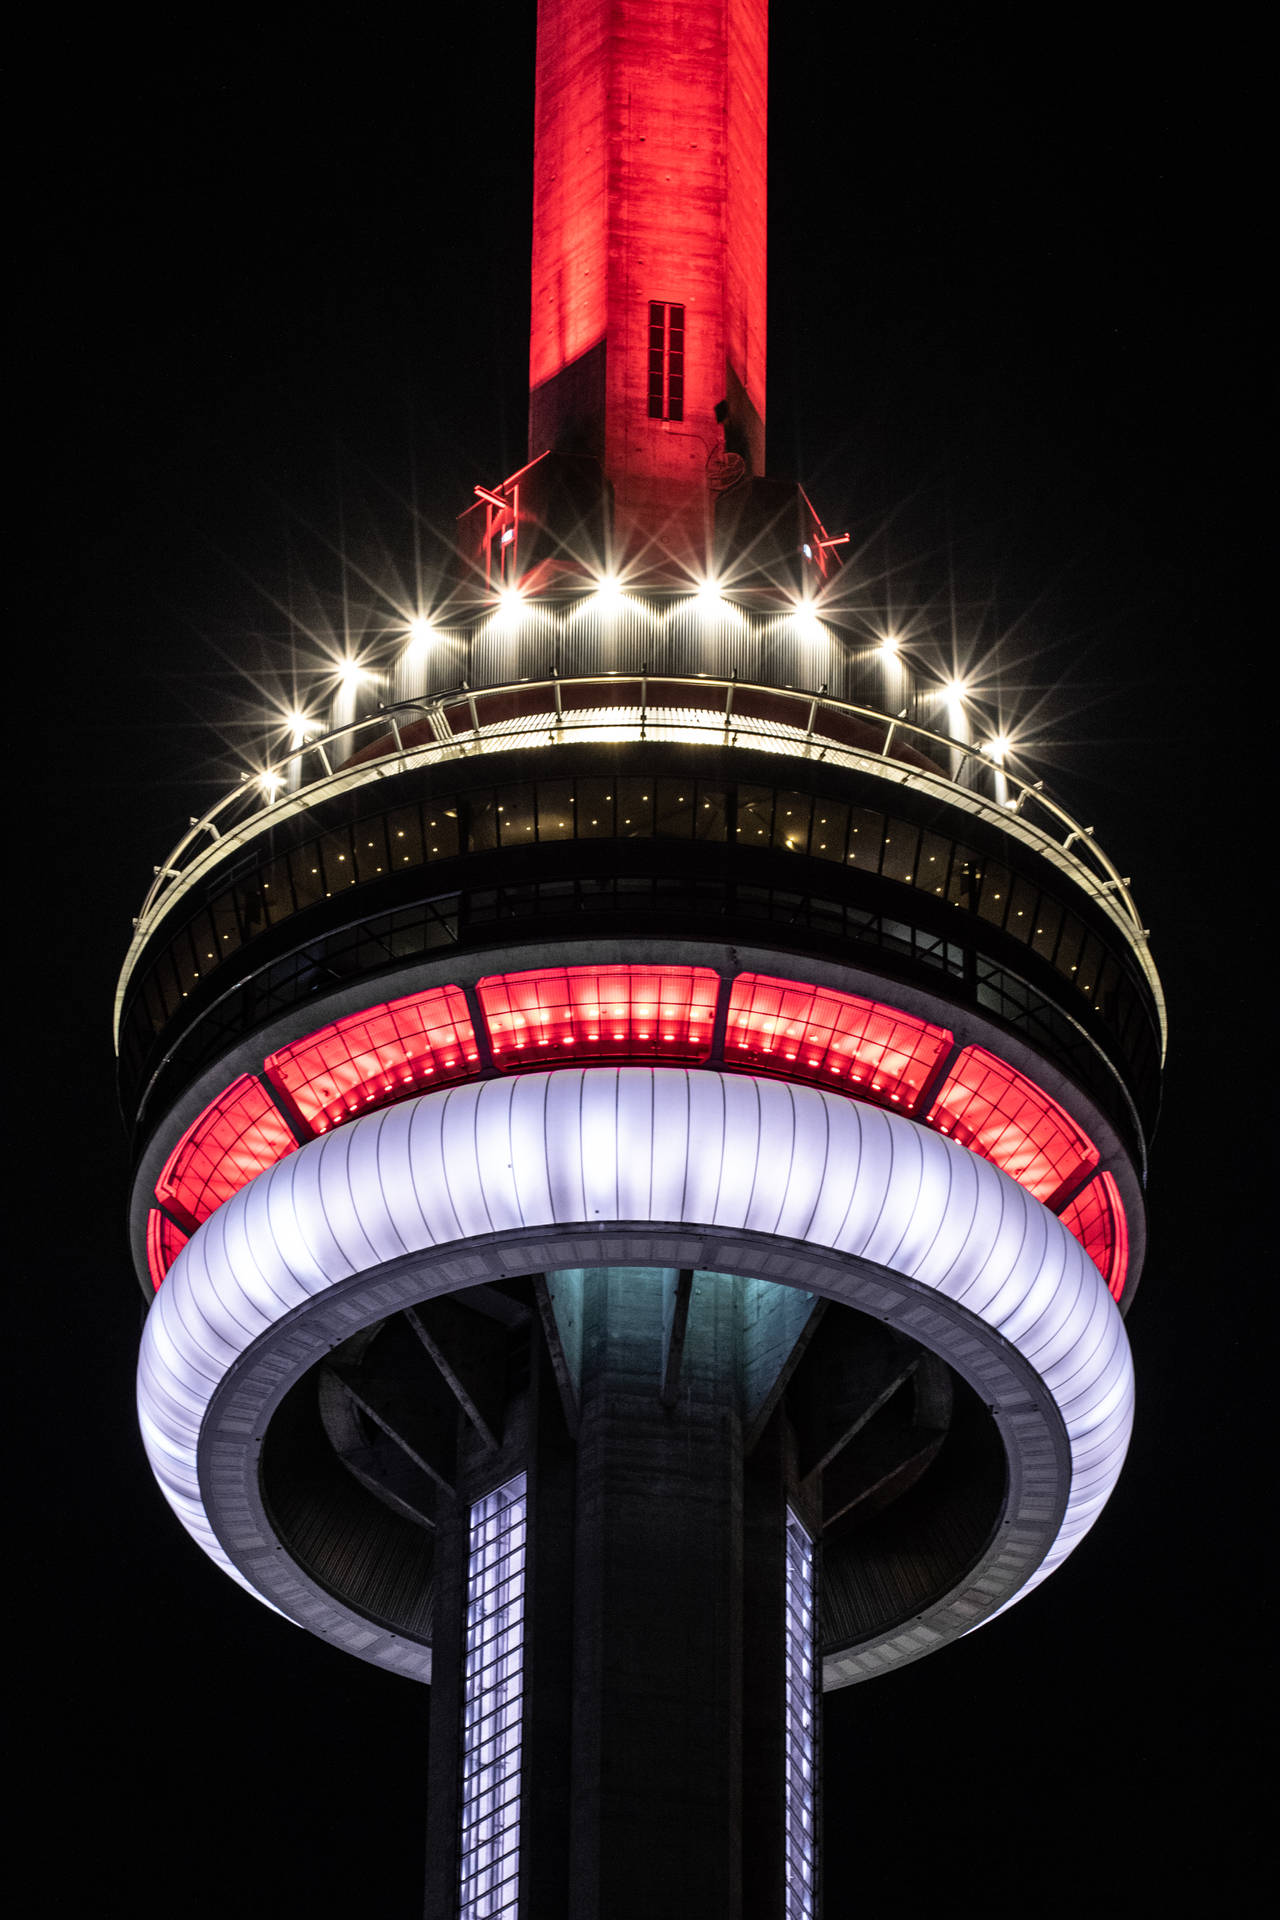 Illuminated CN Tower Dominating Skyline at Night Wallpaper